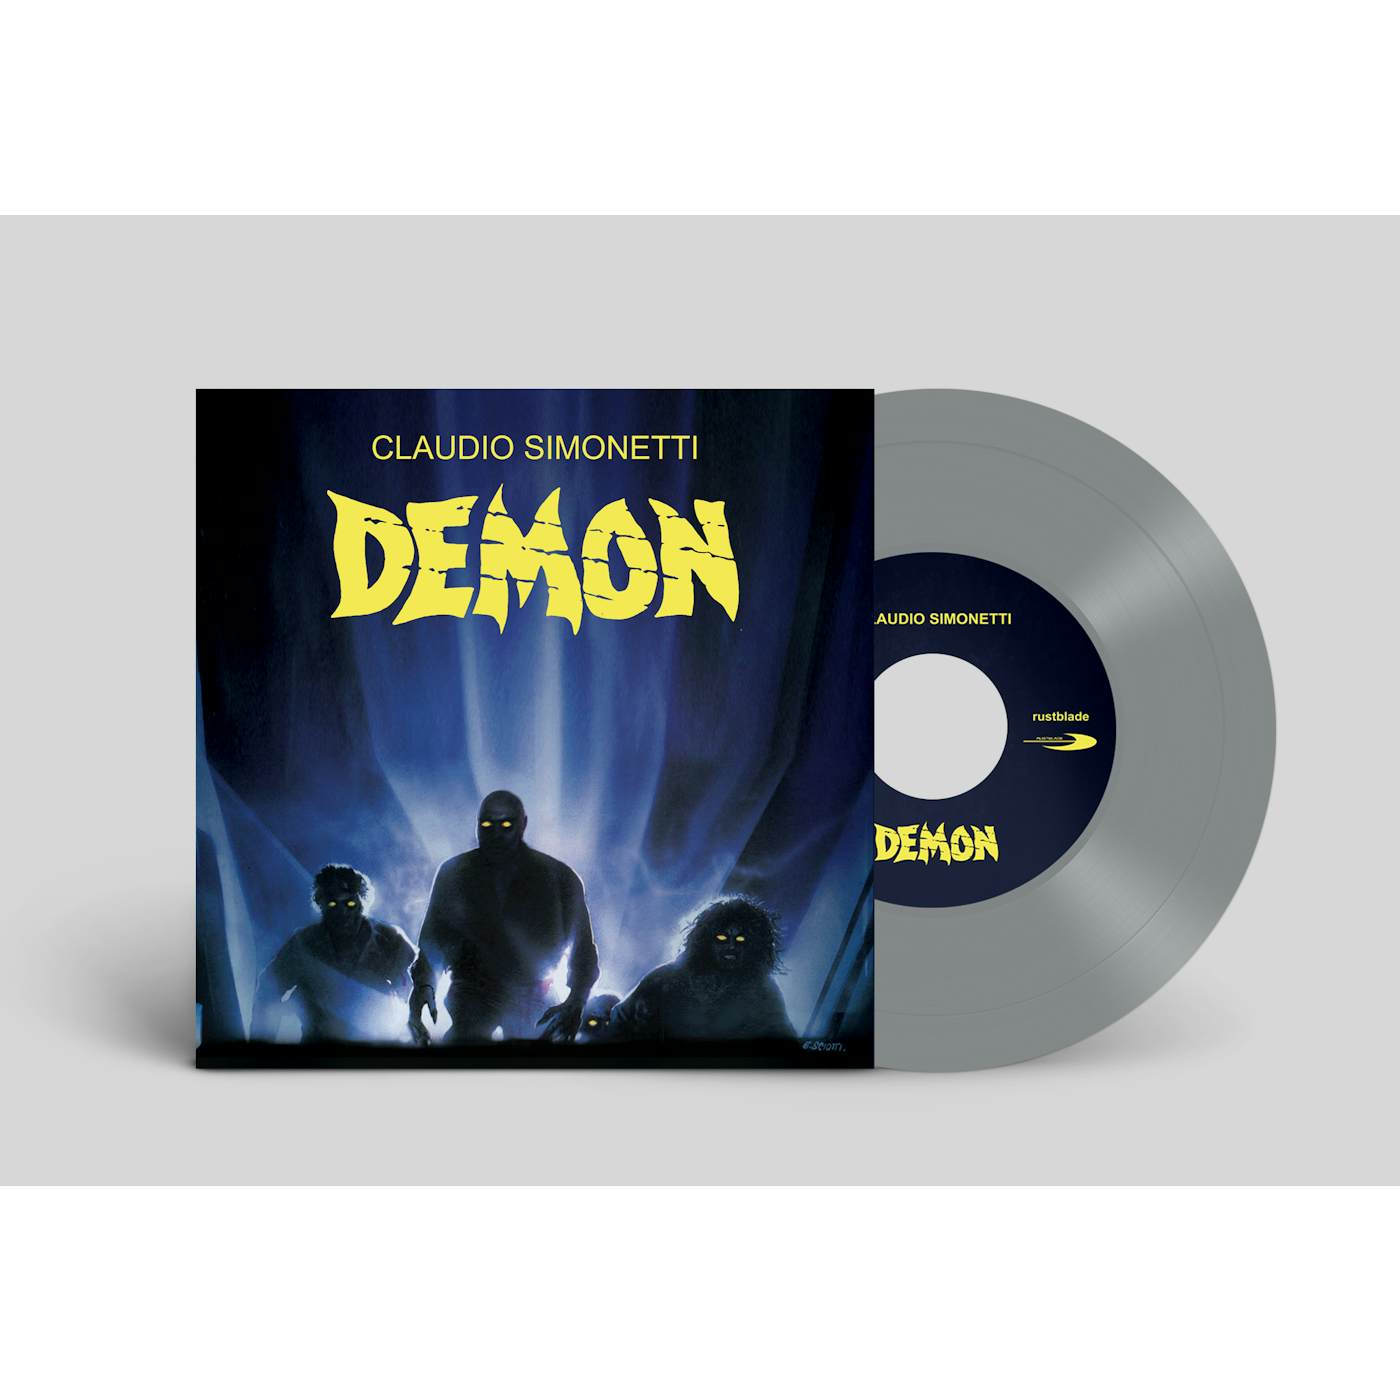 Claudio Simonetti Demon Vinyl Record